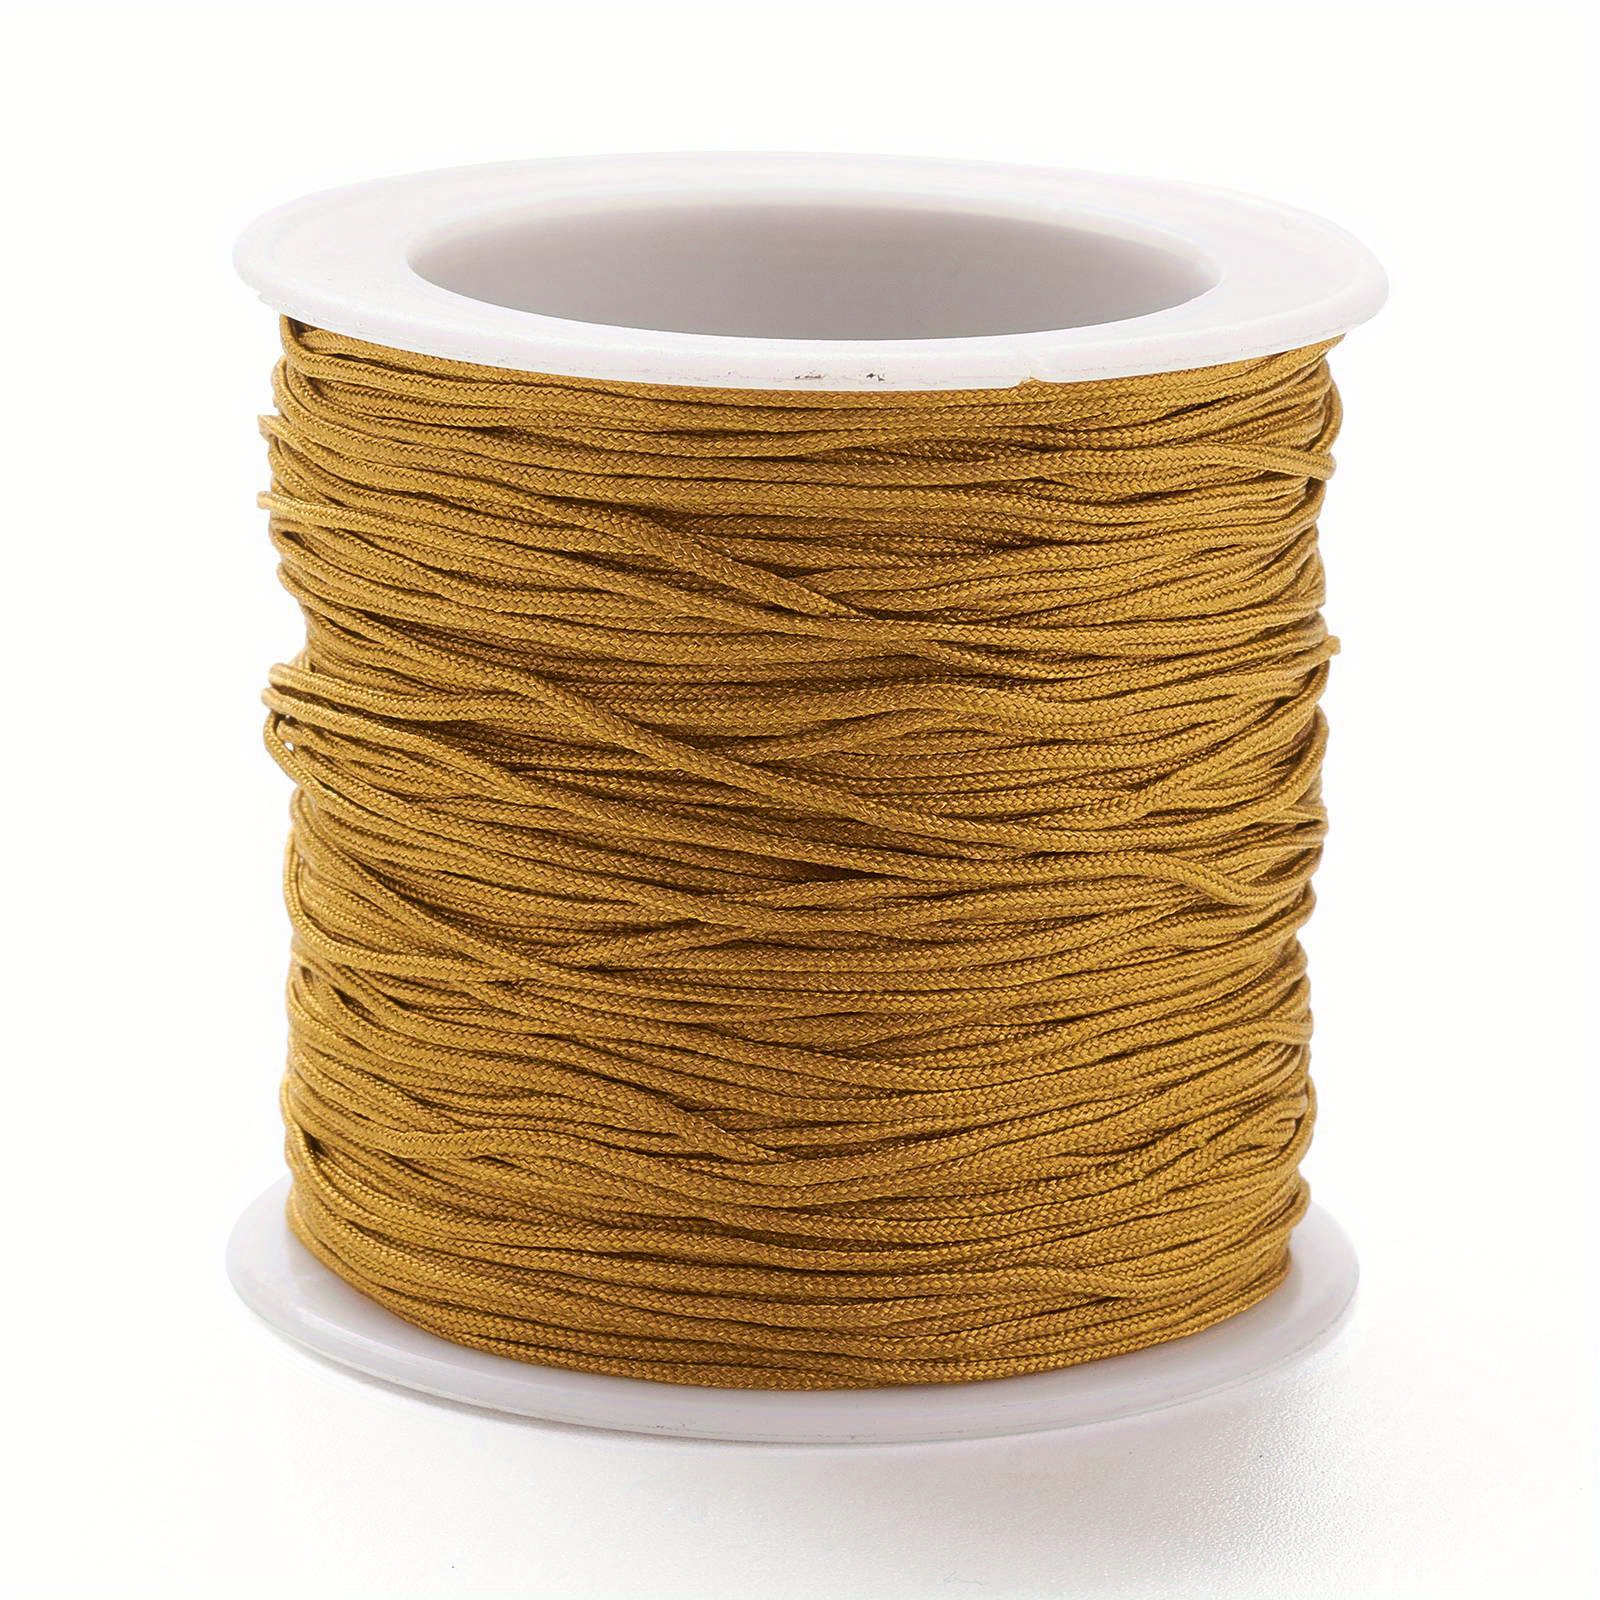 Maine Thread, Braided Waxed Cord, 70 yard spool, Black 